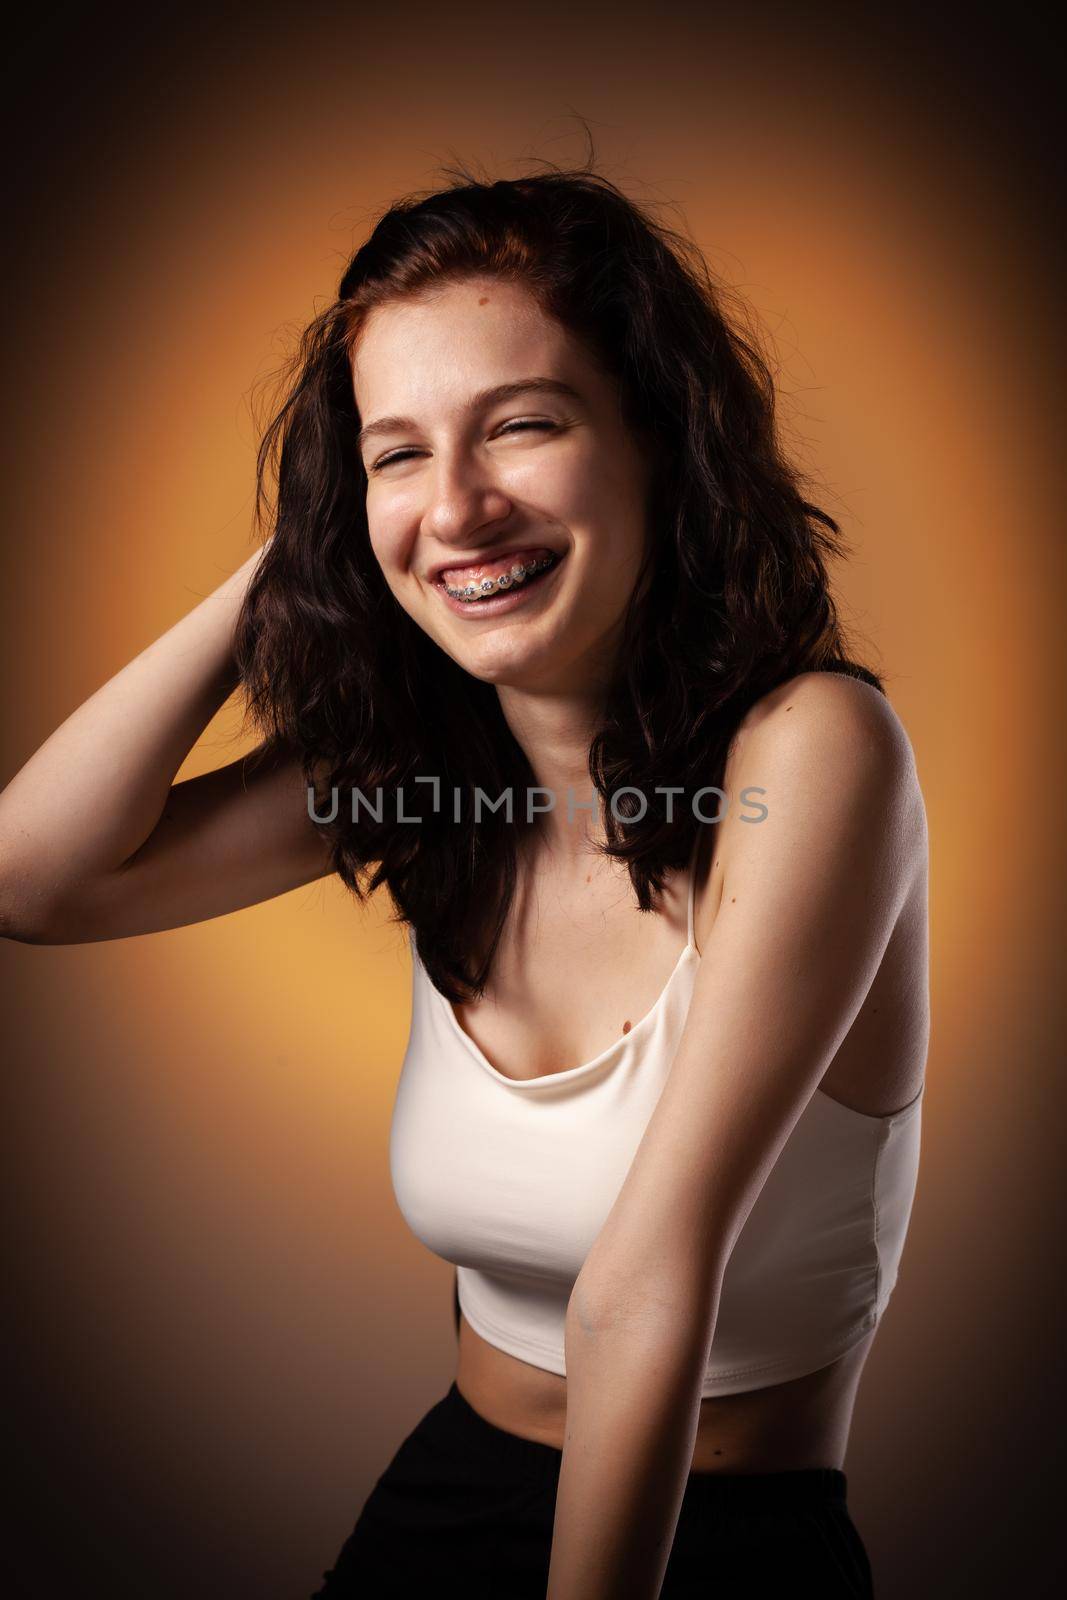 Teenage girl with dental braces. Studio portrait on neon orange colored background.. by kokimk